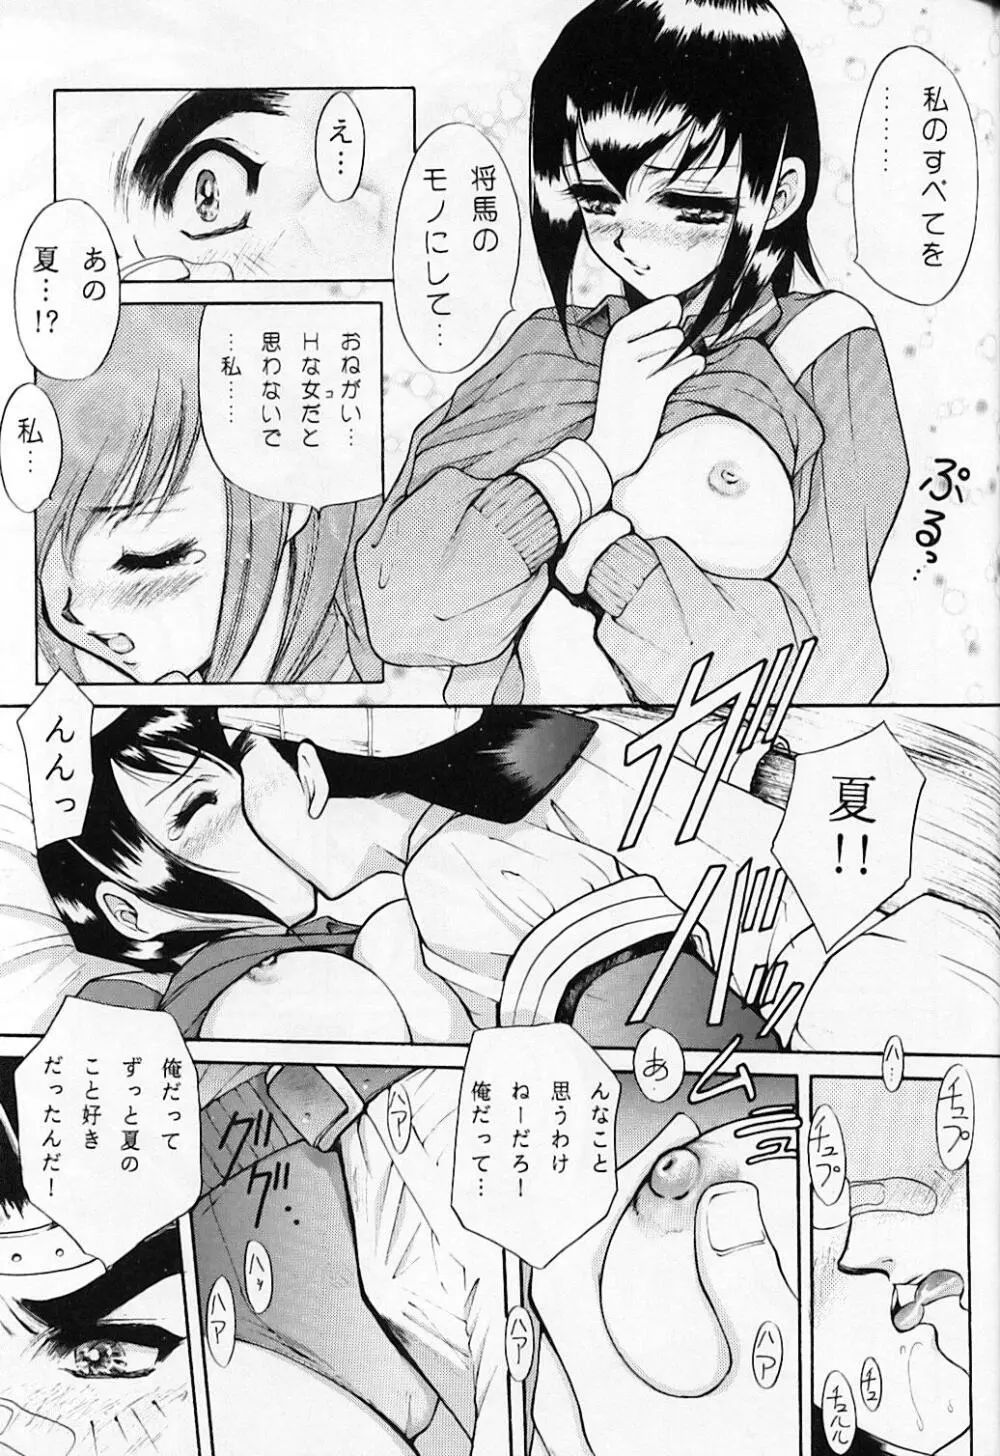 CAPCOMっち - page58